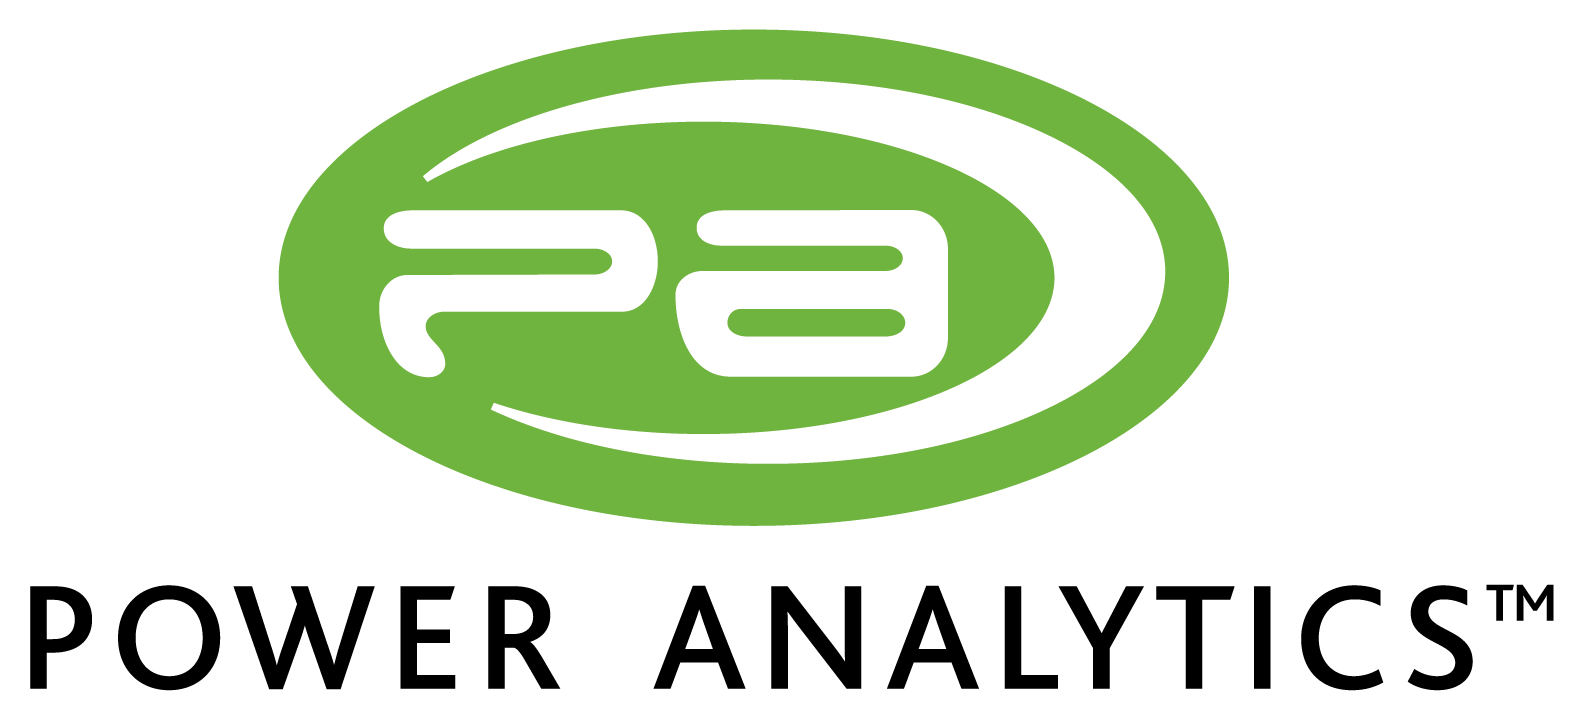 Power Analytics Global Corporation Logo